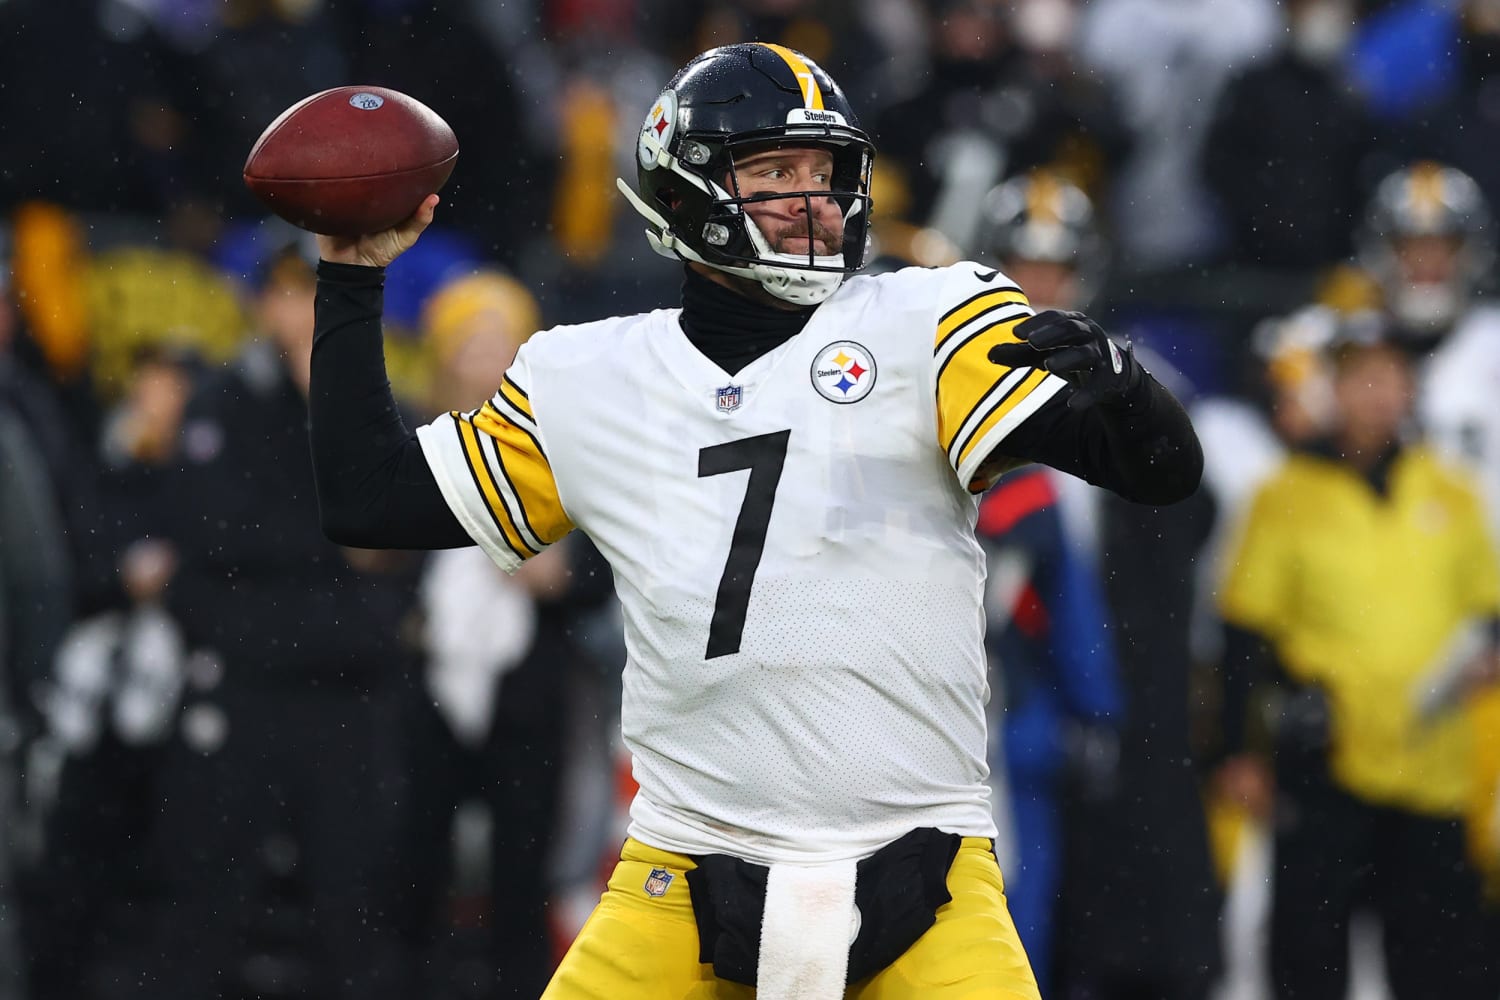 Peter King’s column: Ben Roethlisberger and the Steelers crash NFL playoffs